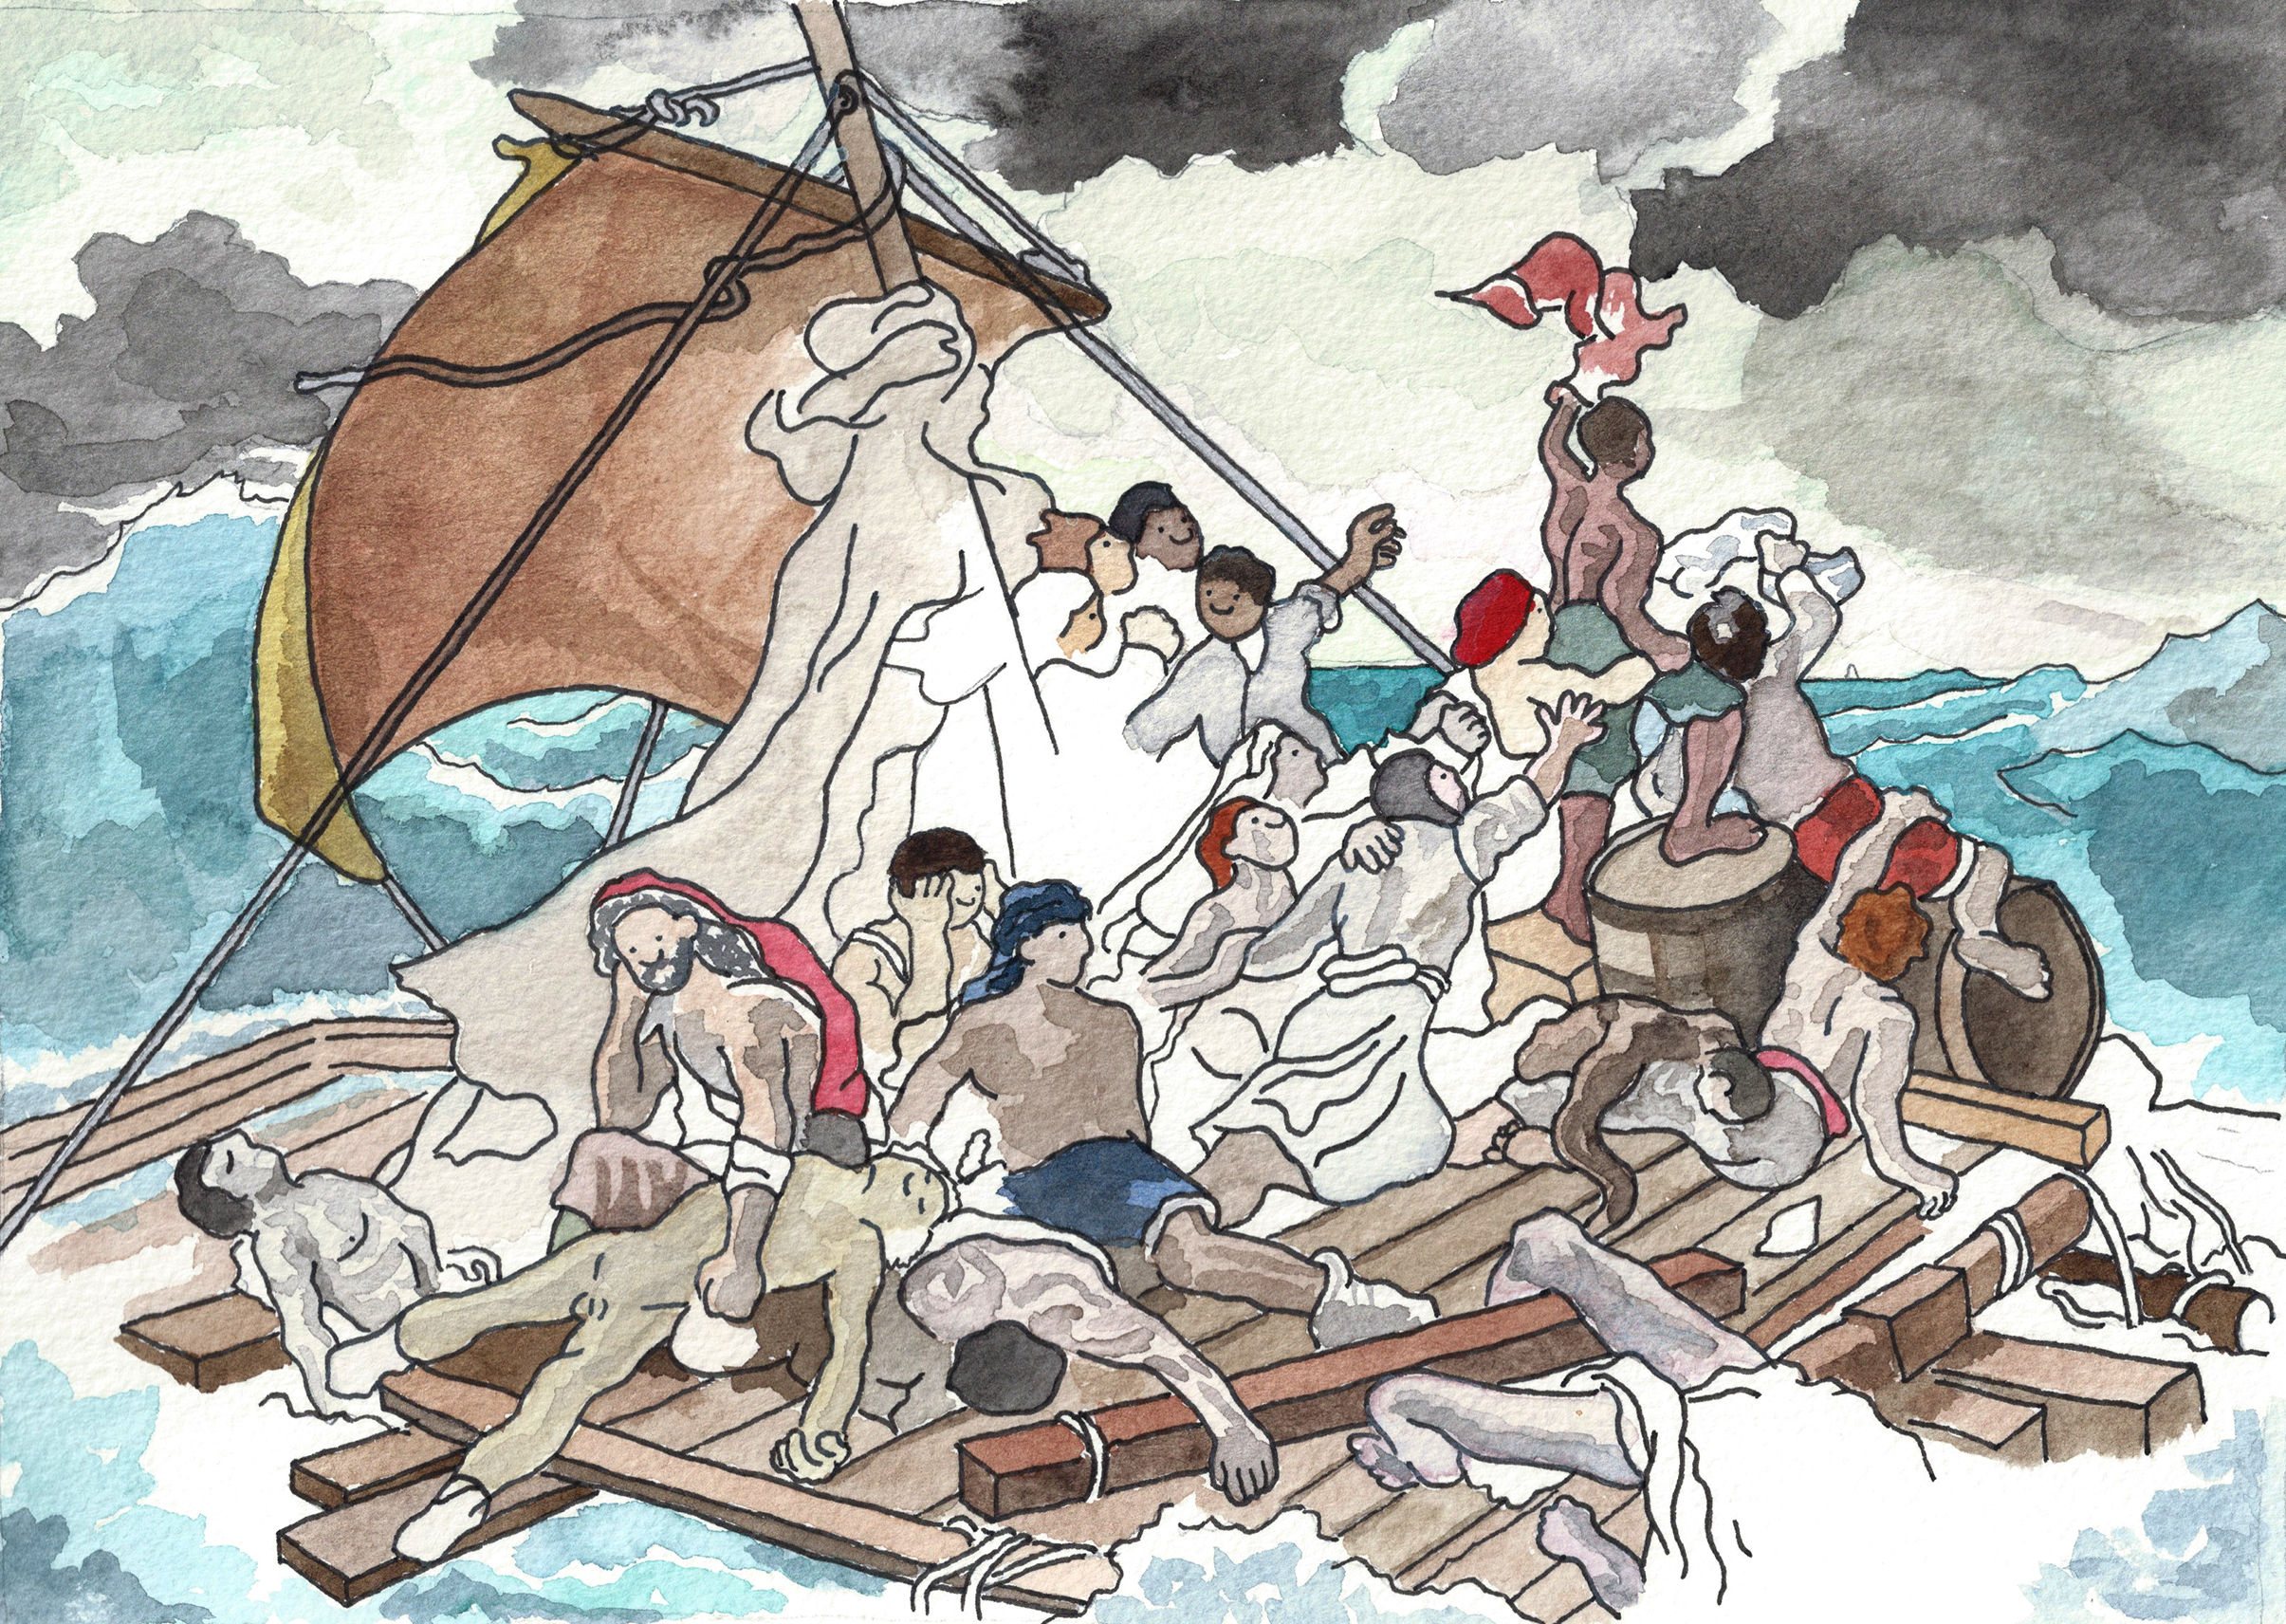 After Gericault, The Raft of the Medusa (1819)